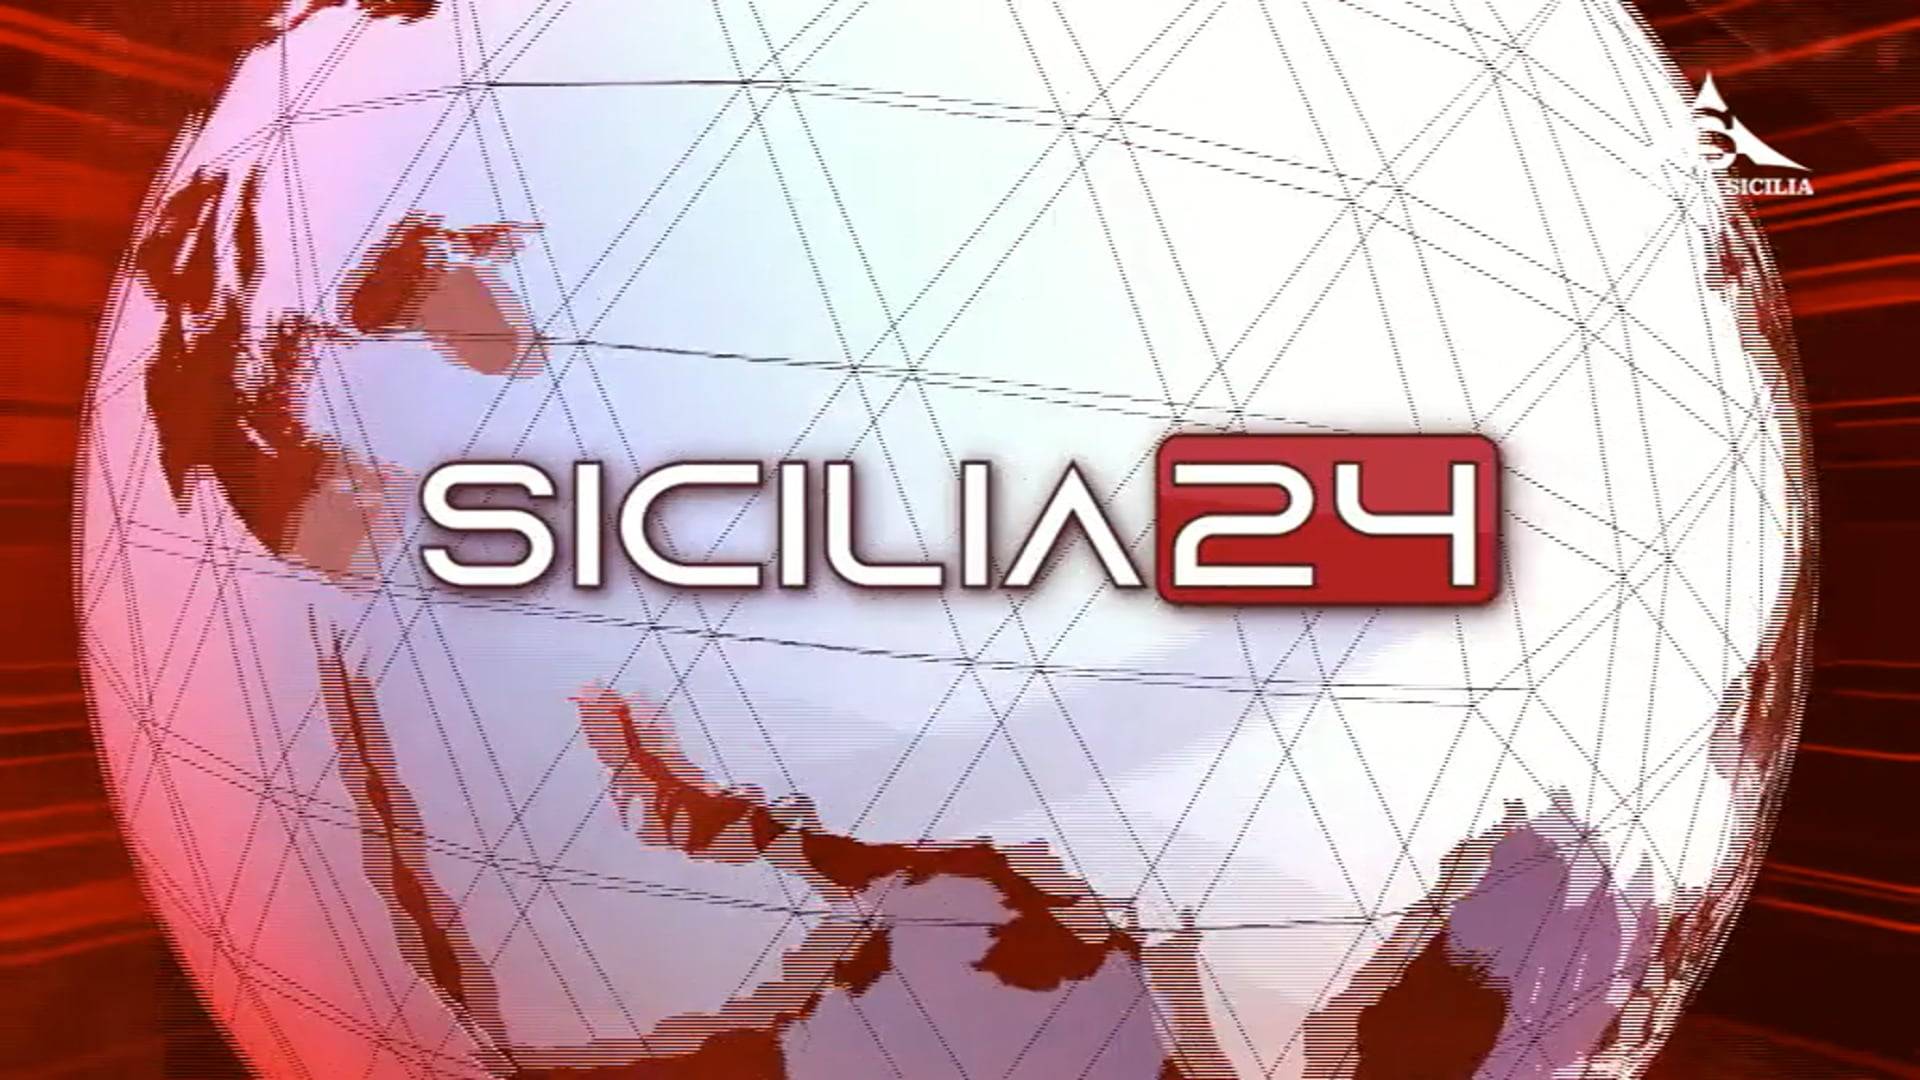 sicilia24-rassegna-stampa-18-marzo-2022-vimeo-thumbnail.jpg